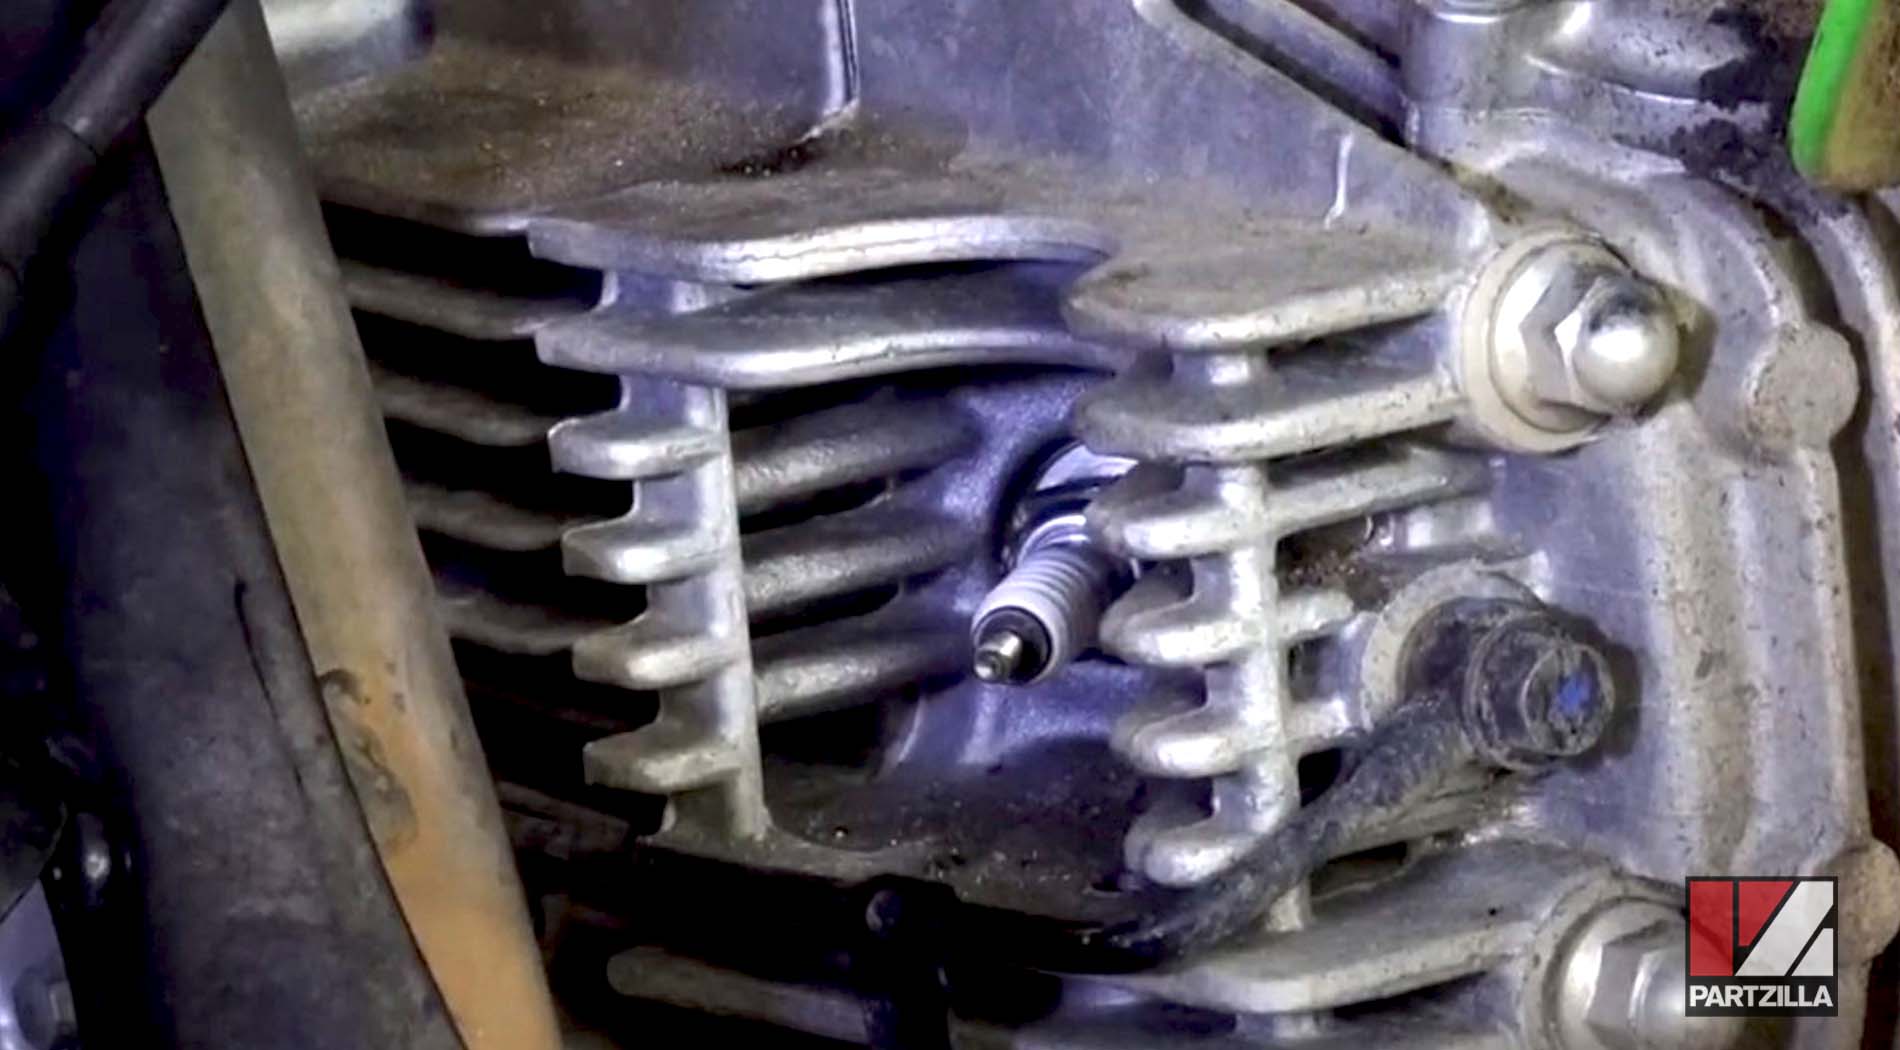 Motorcycle spark plugs